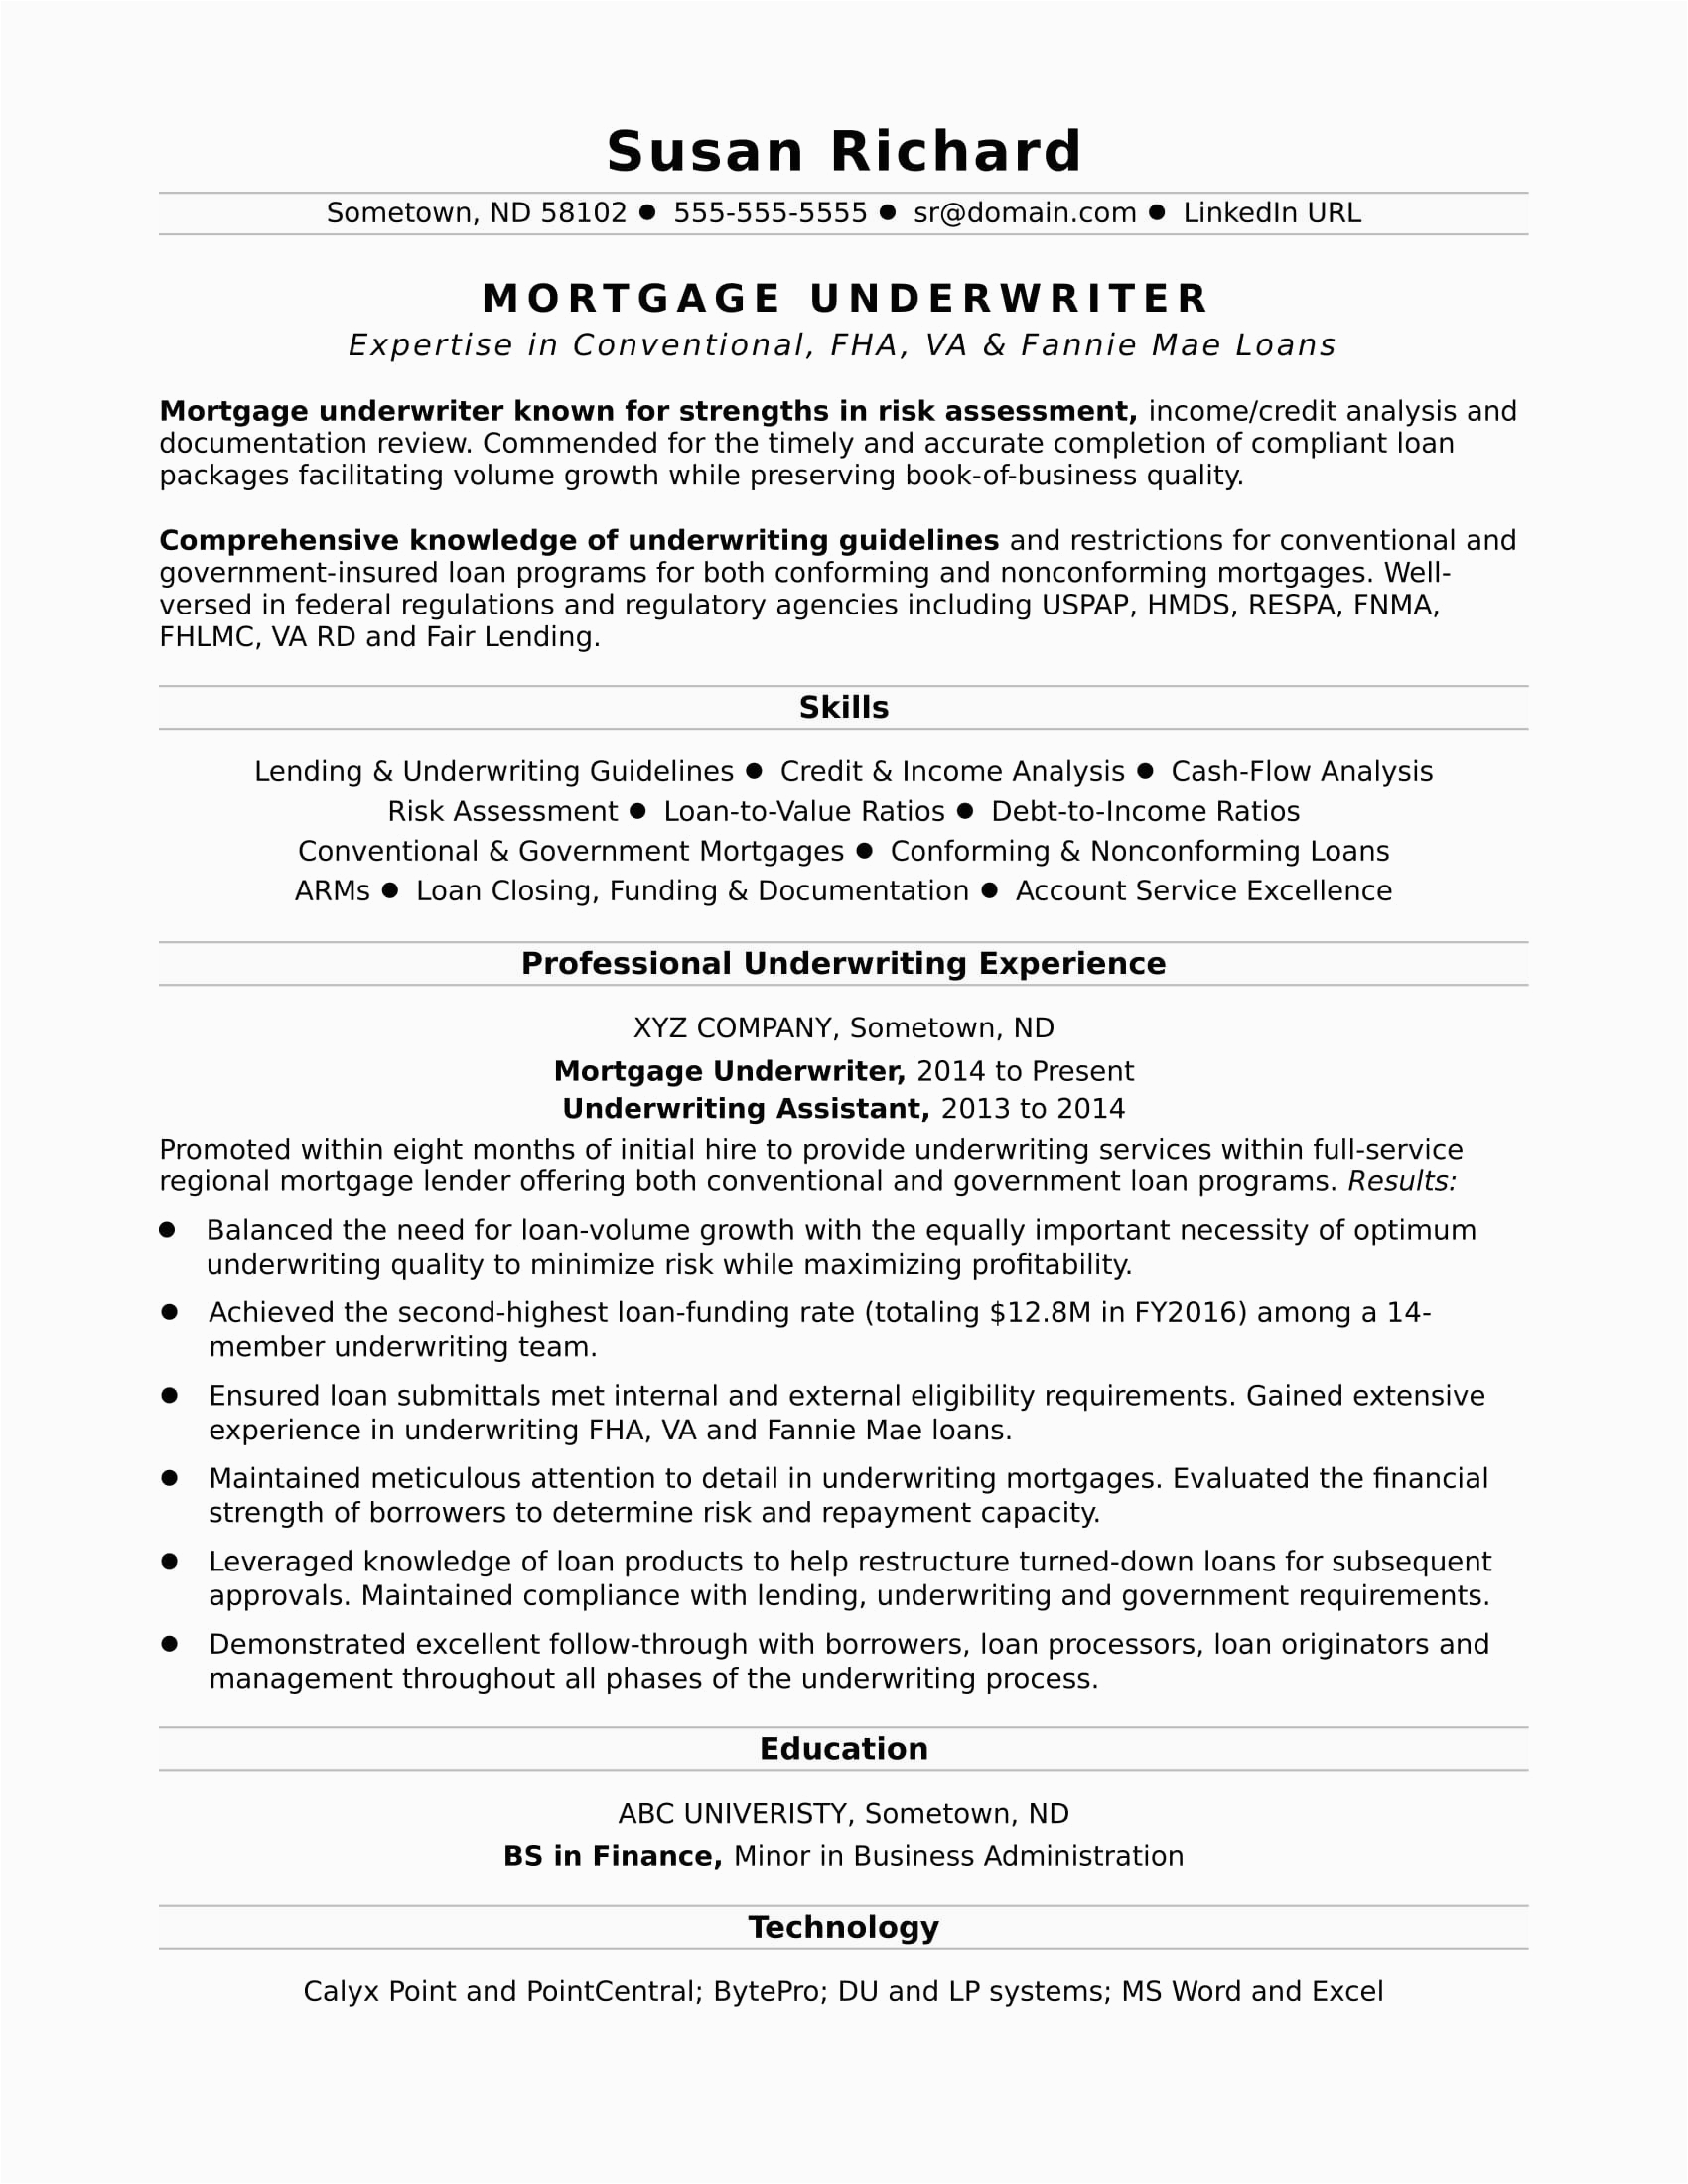 Sample Resume for Us Mortgage Underwriter Mortgage Underwriter Resume Sample